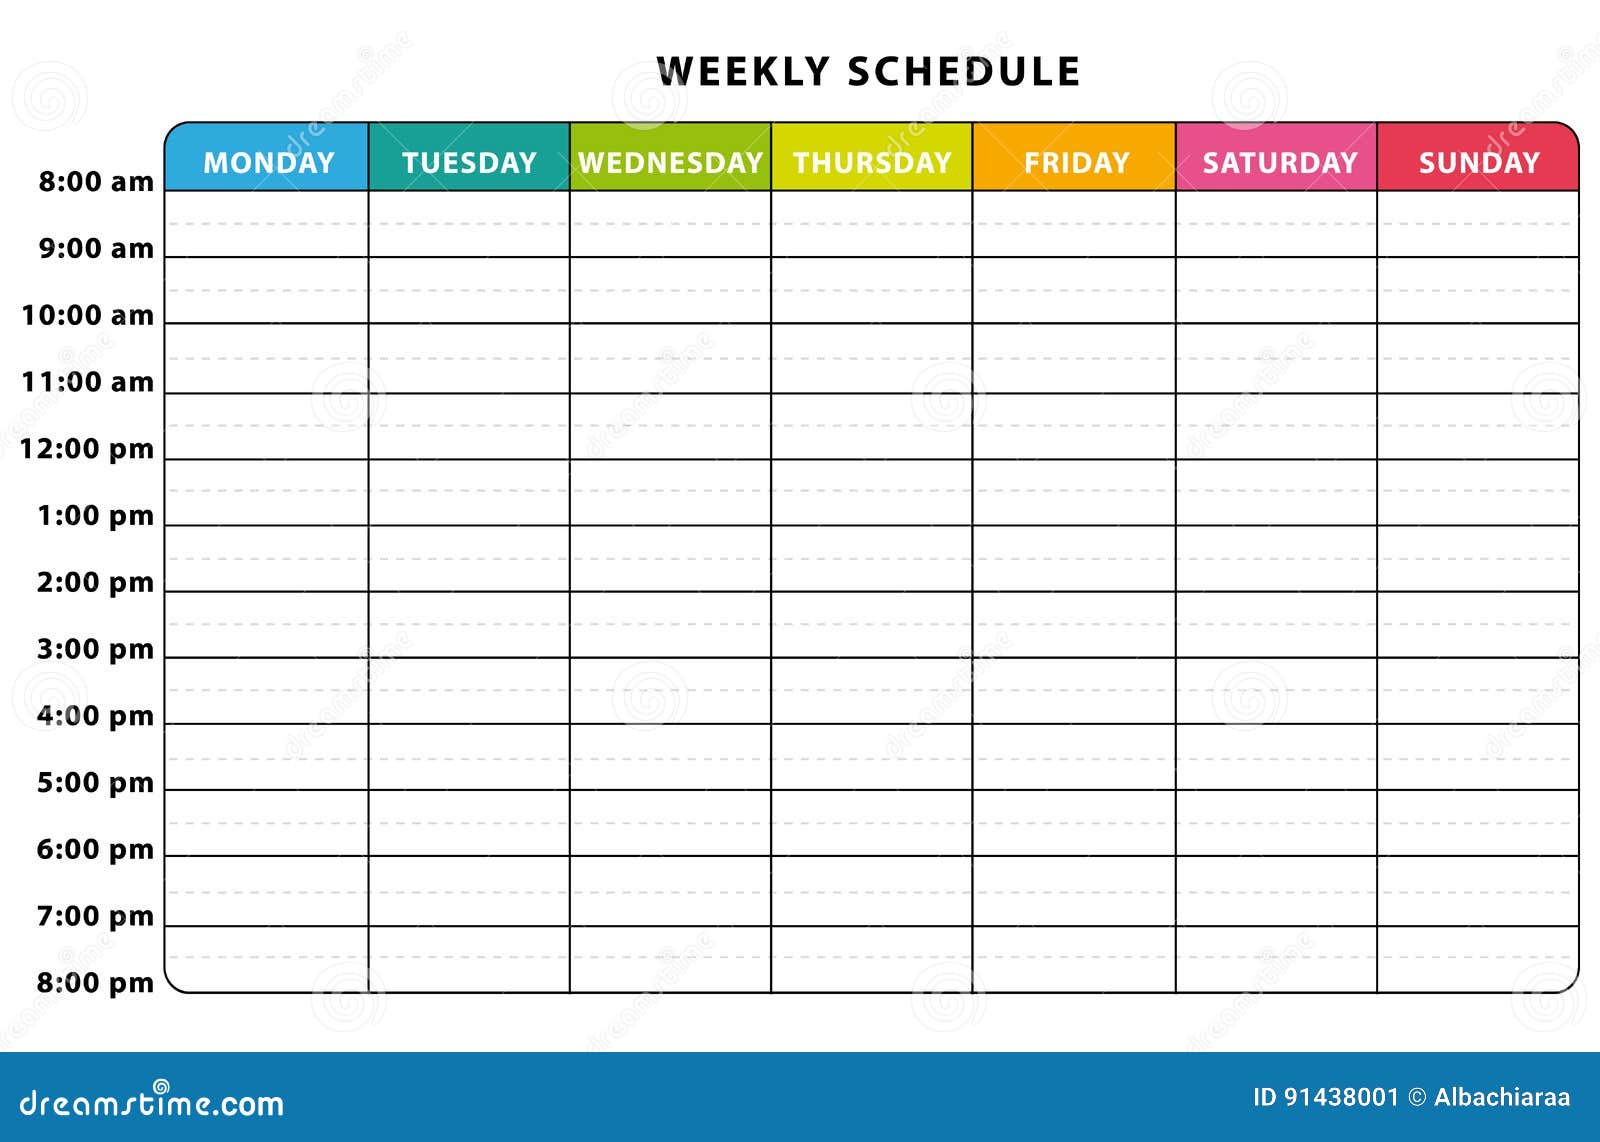 weekly schedule